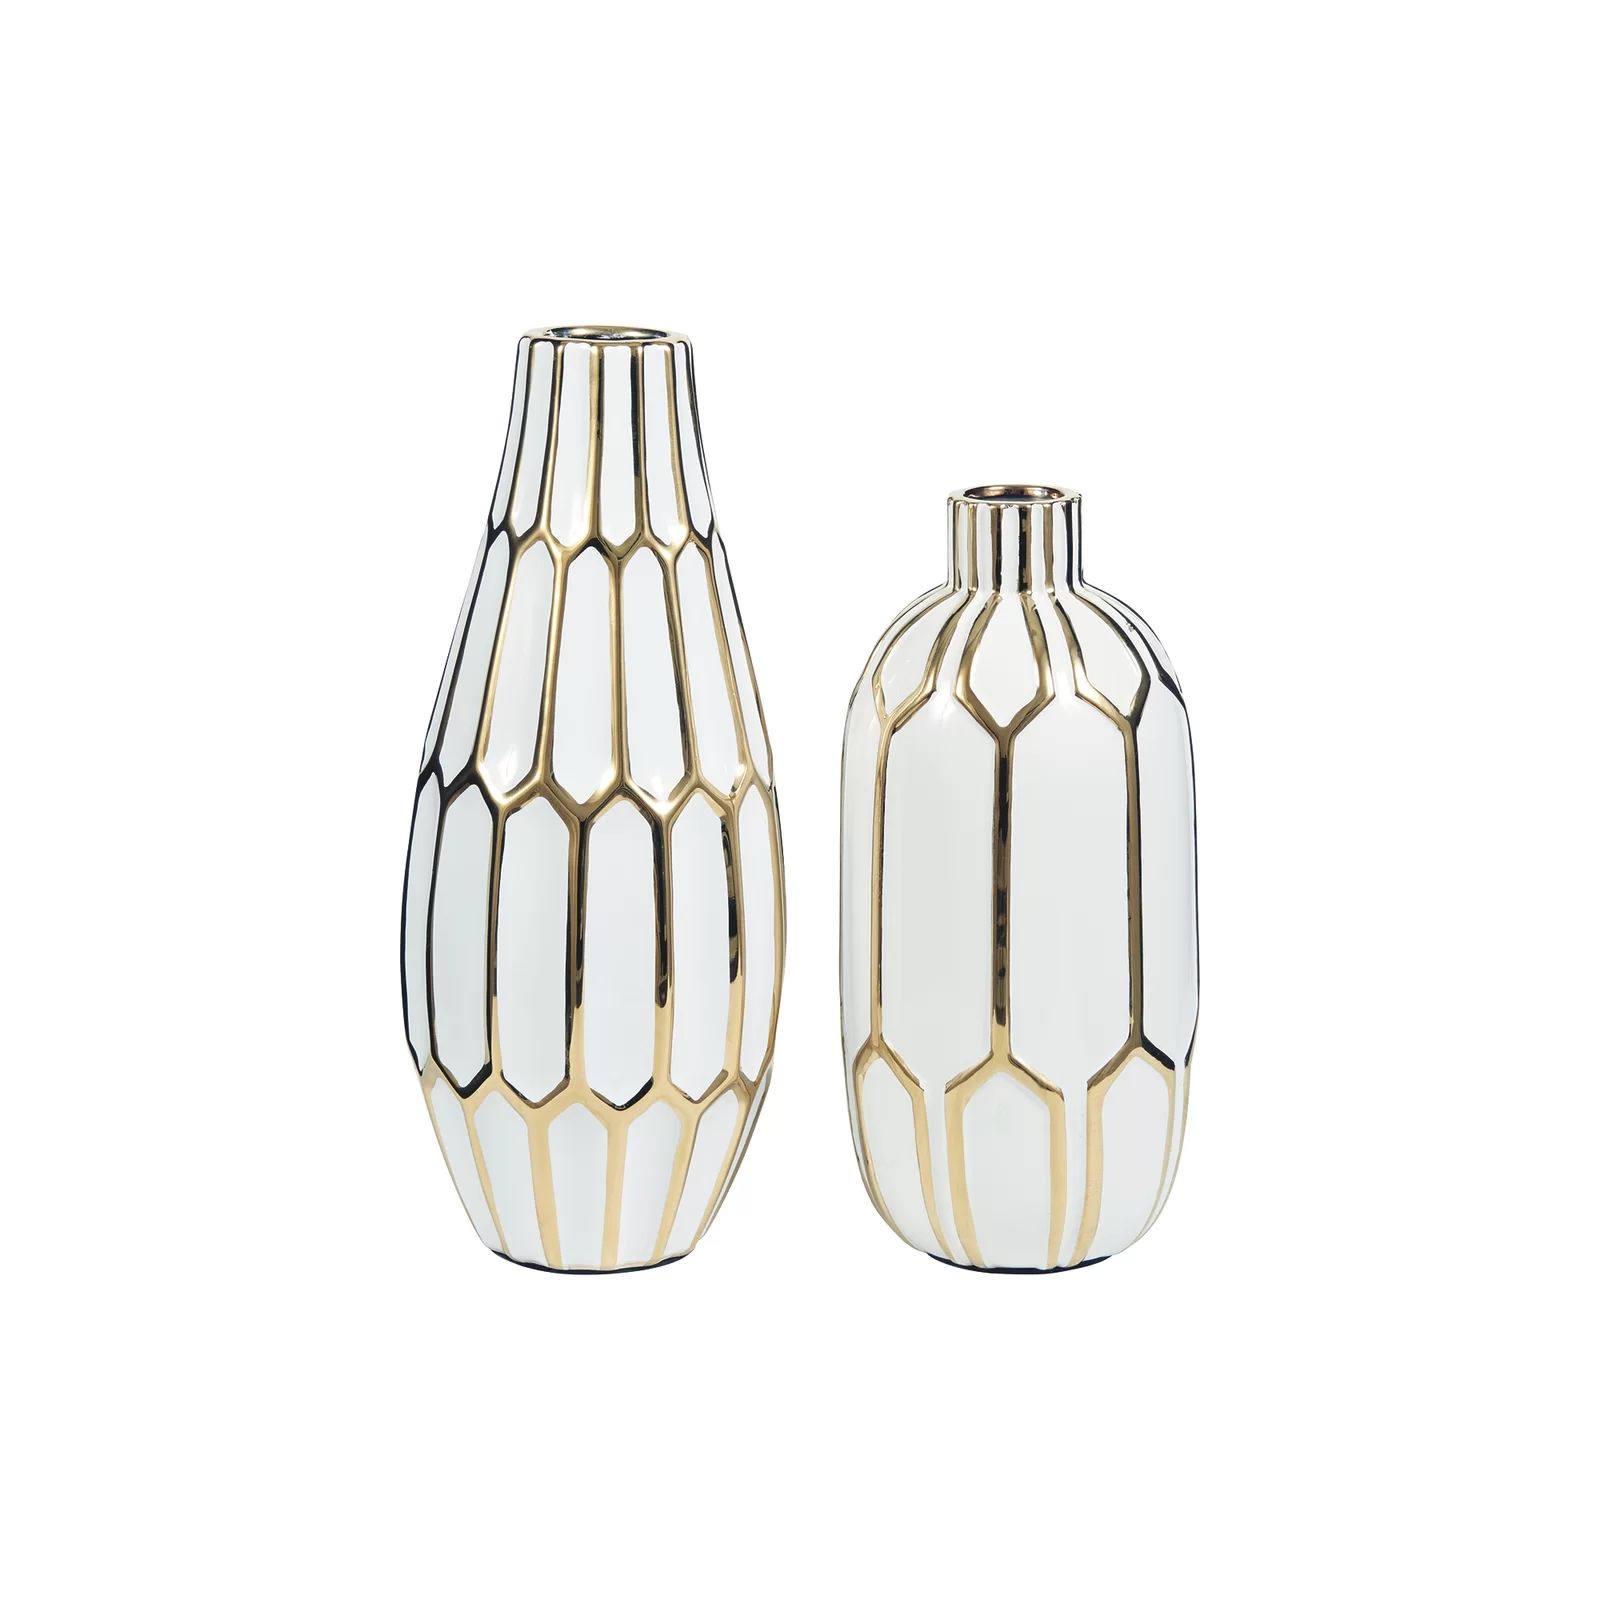 2 Piece Cayd White/Gold Ceramic Table Vase Set | Wayfair Professional